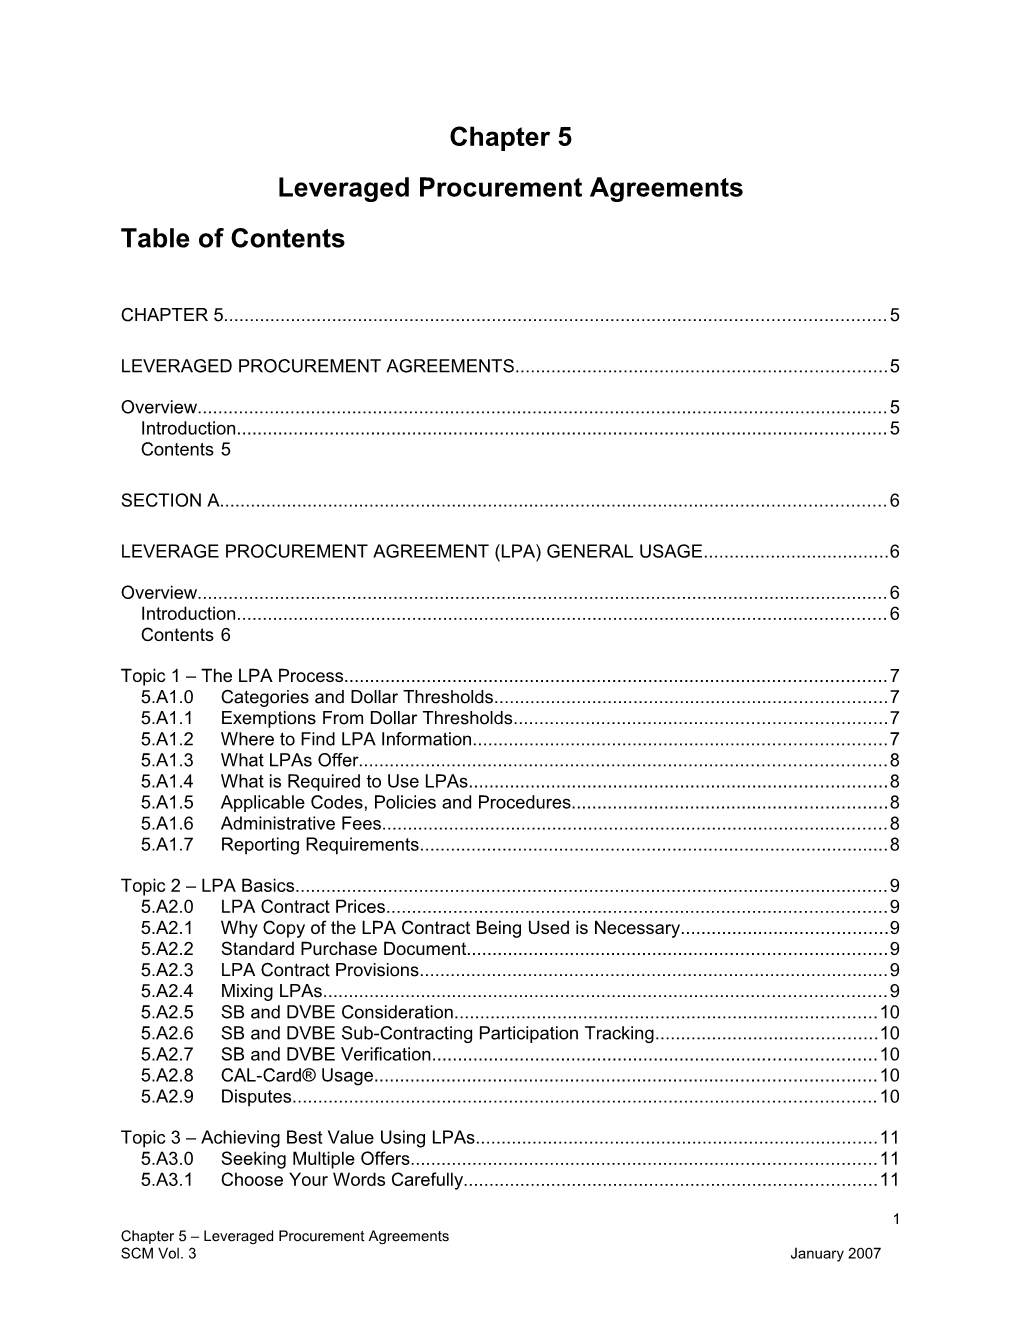 Leveraged Procurement Agreements